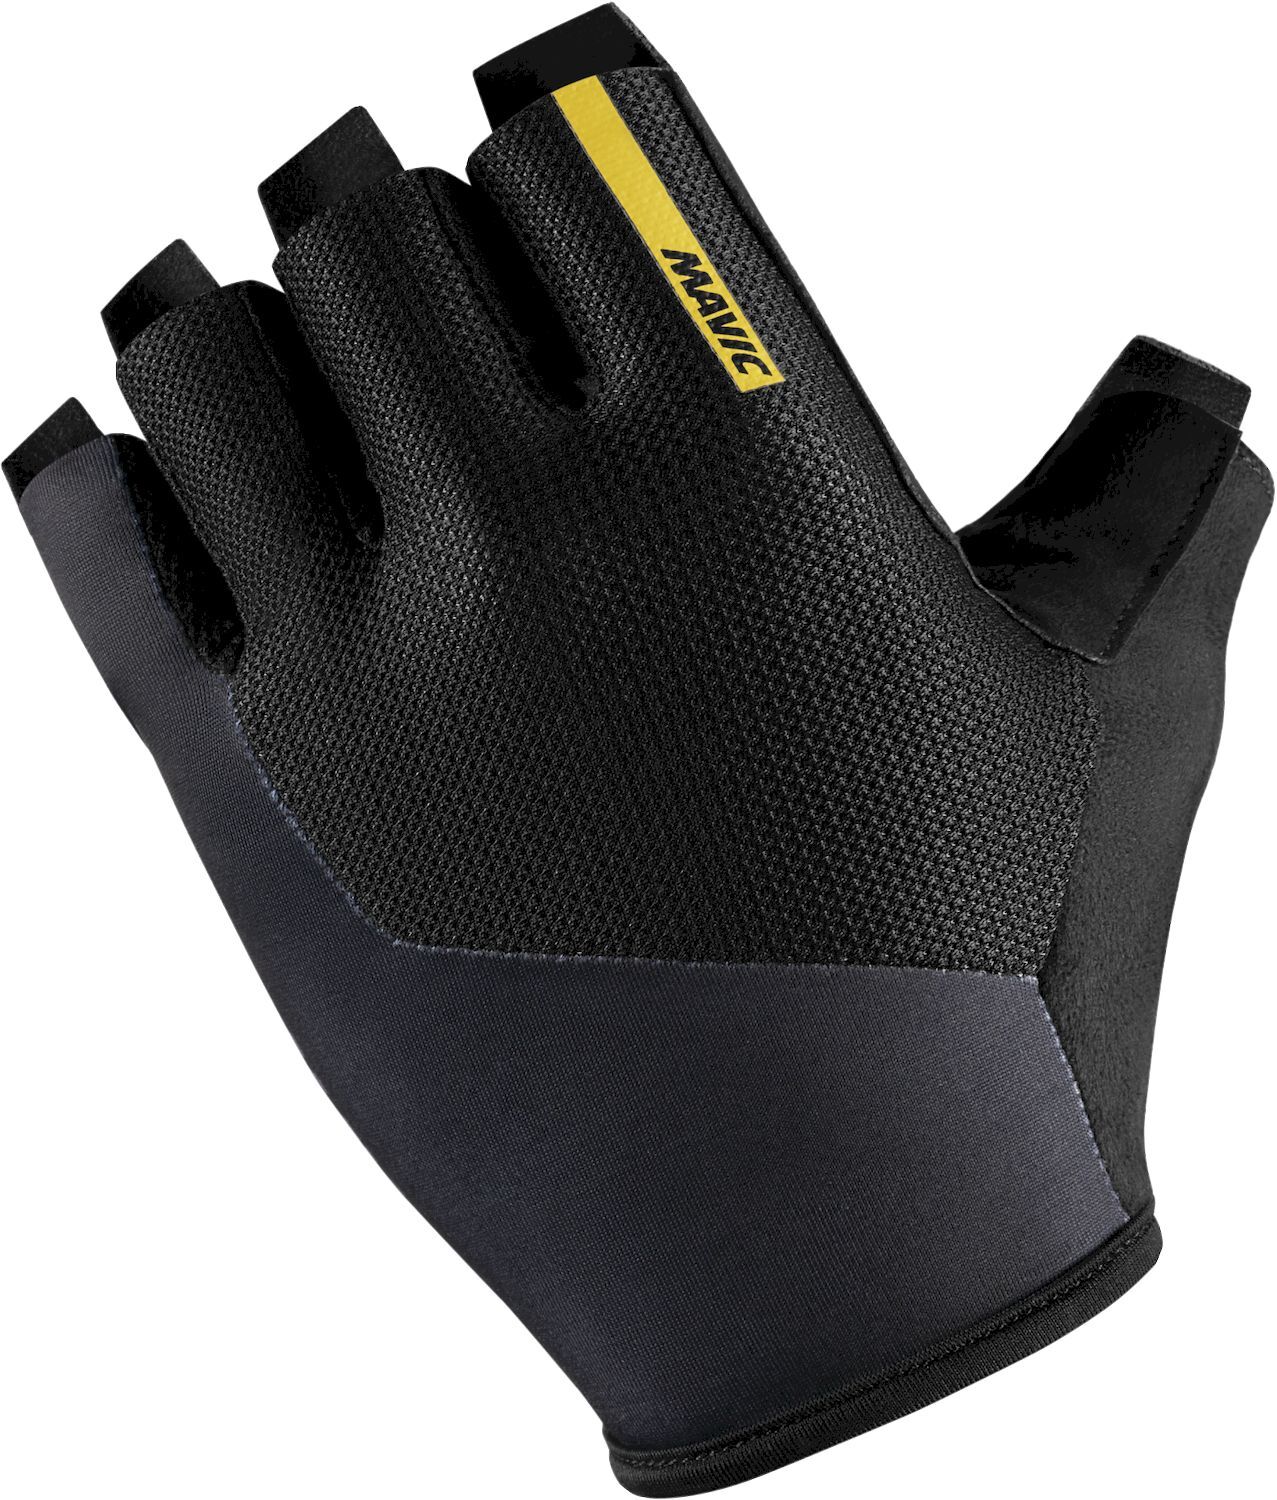 Mavic Ksyrium - Cycling gloves